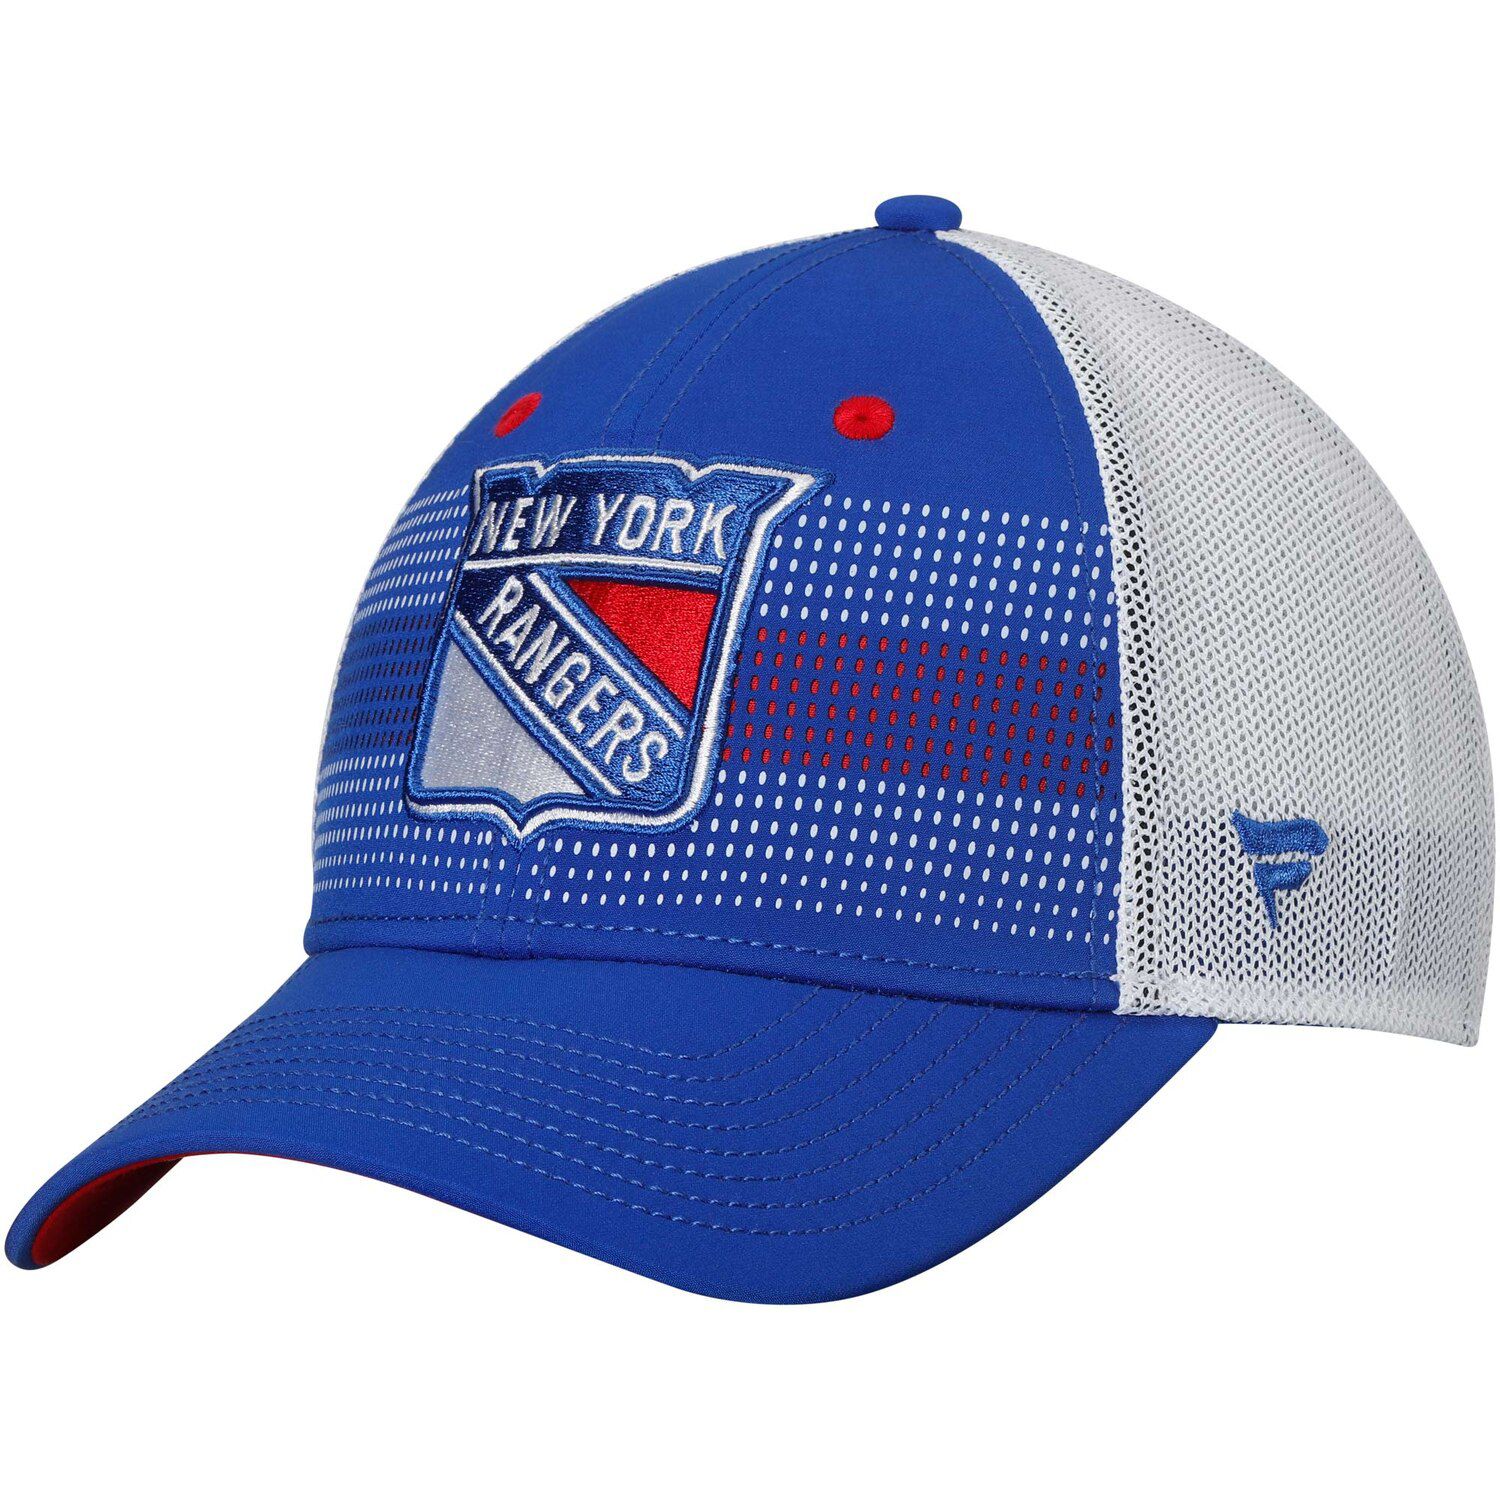 white new york rangers hat